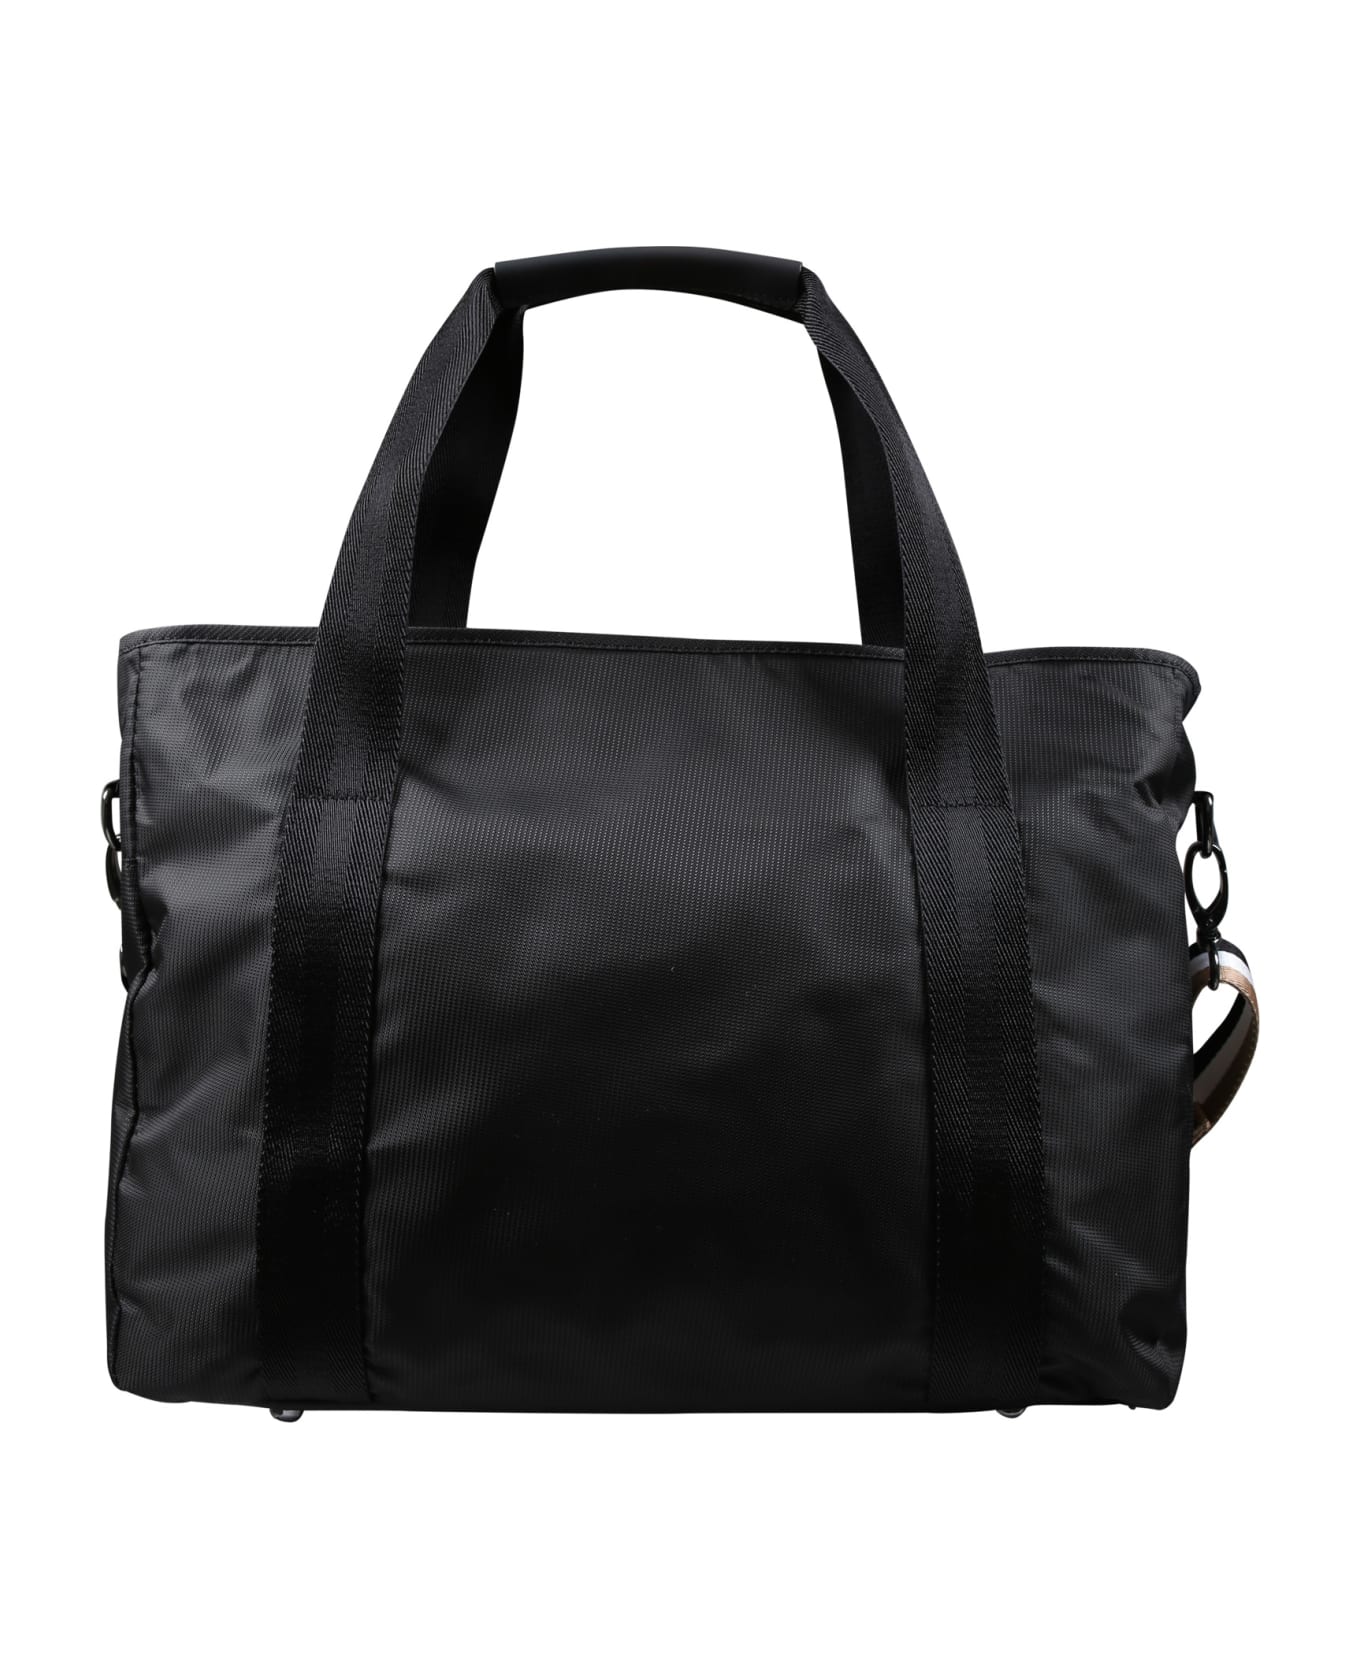 Hugo Boss Black Mother Bag For Baby Boy With Logo - Black